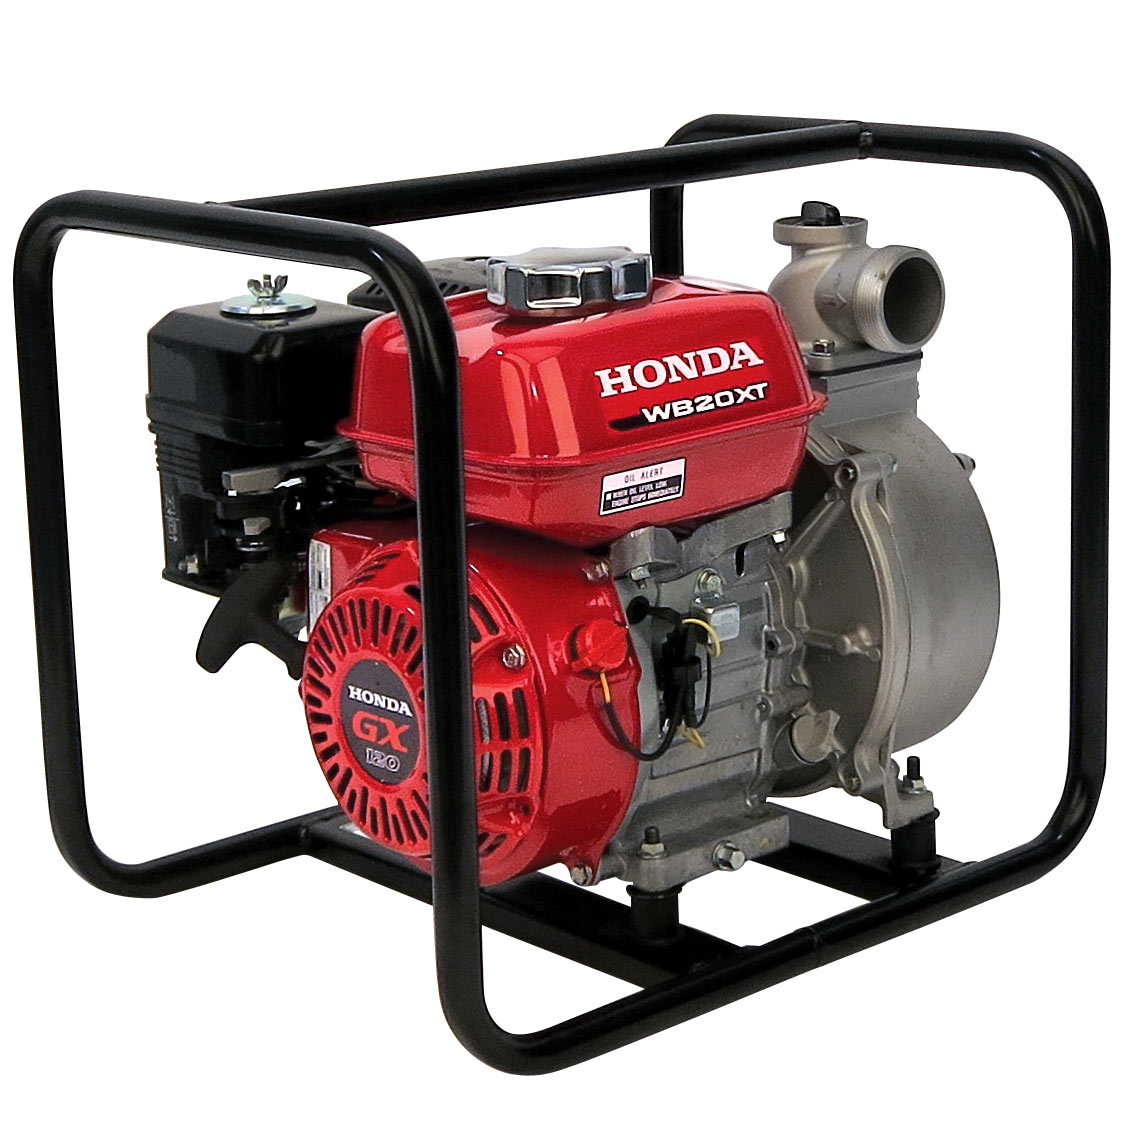 Honda Water Pumps at Legacy Feed and Fuel